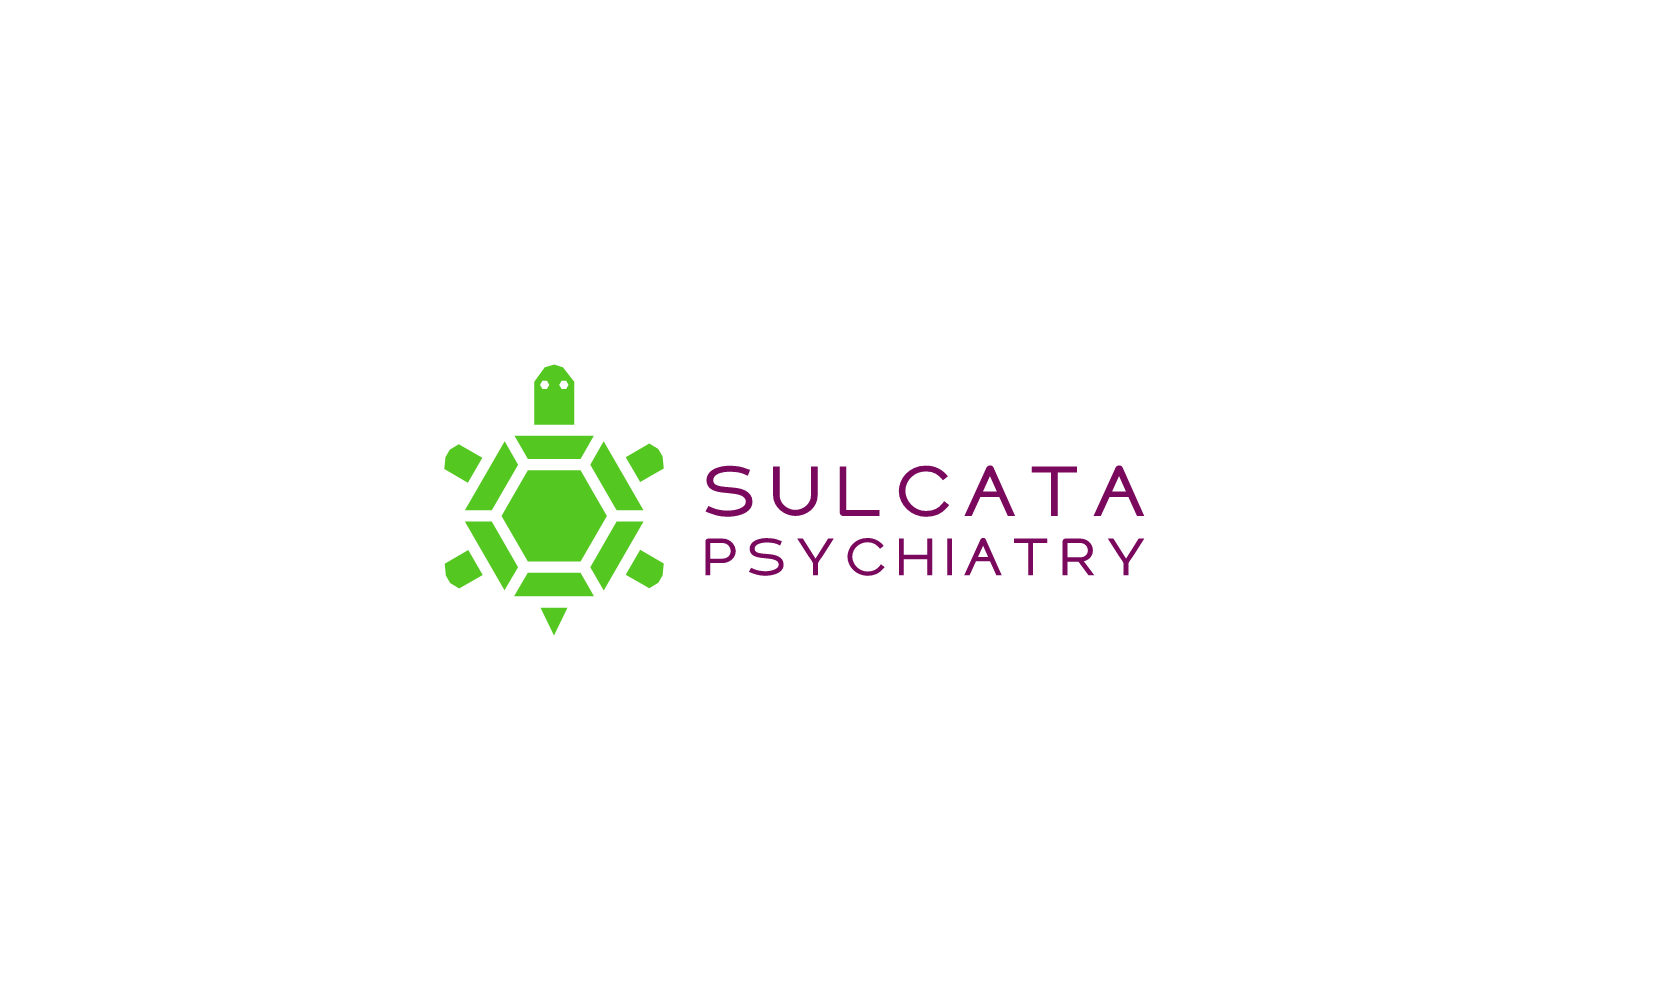 Providing Personalized Psychiatric Care - Sulcata Psychiatry